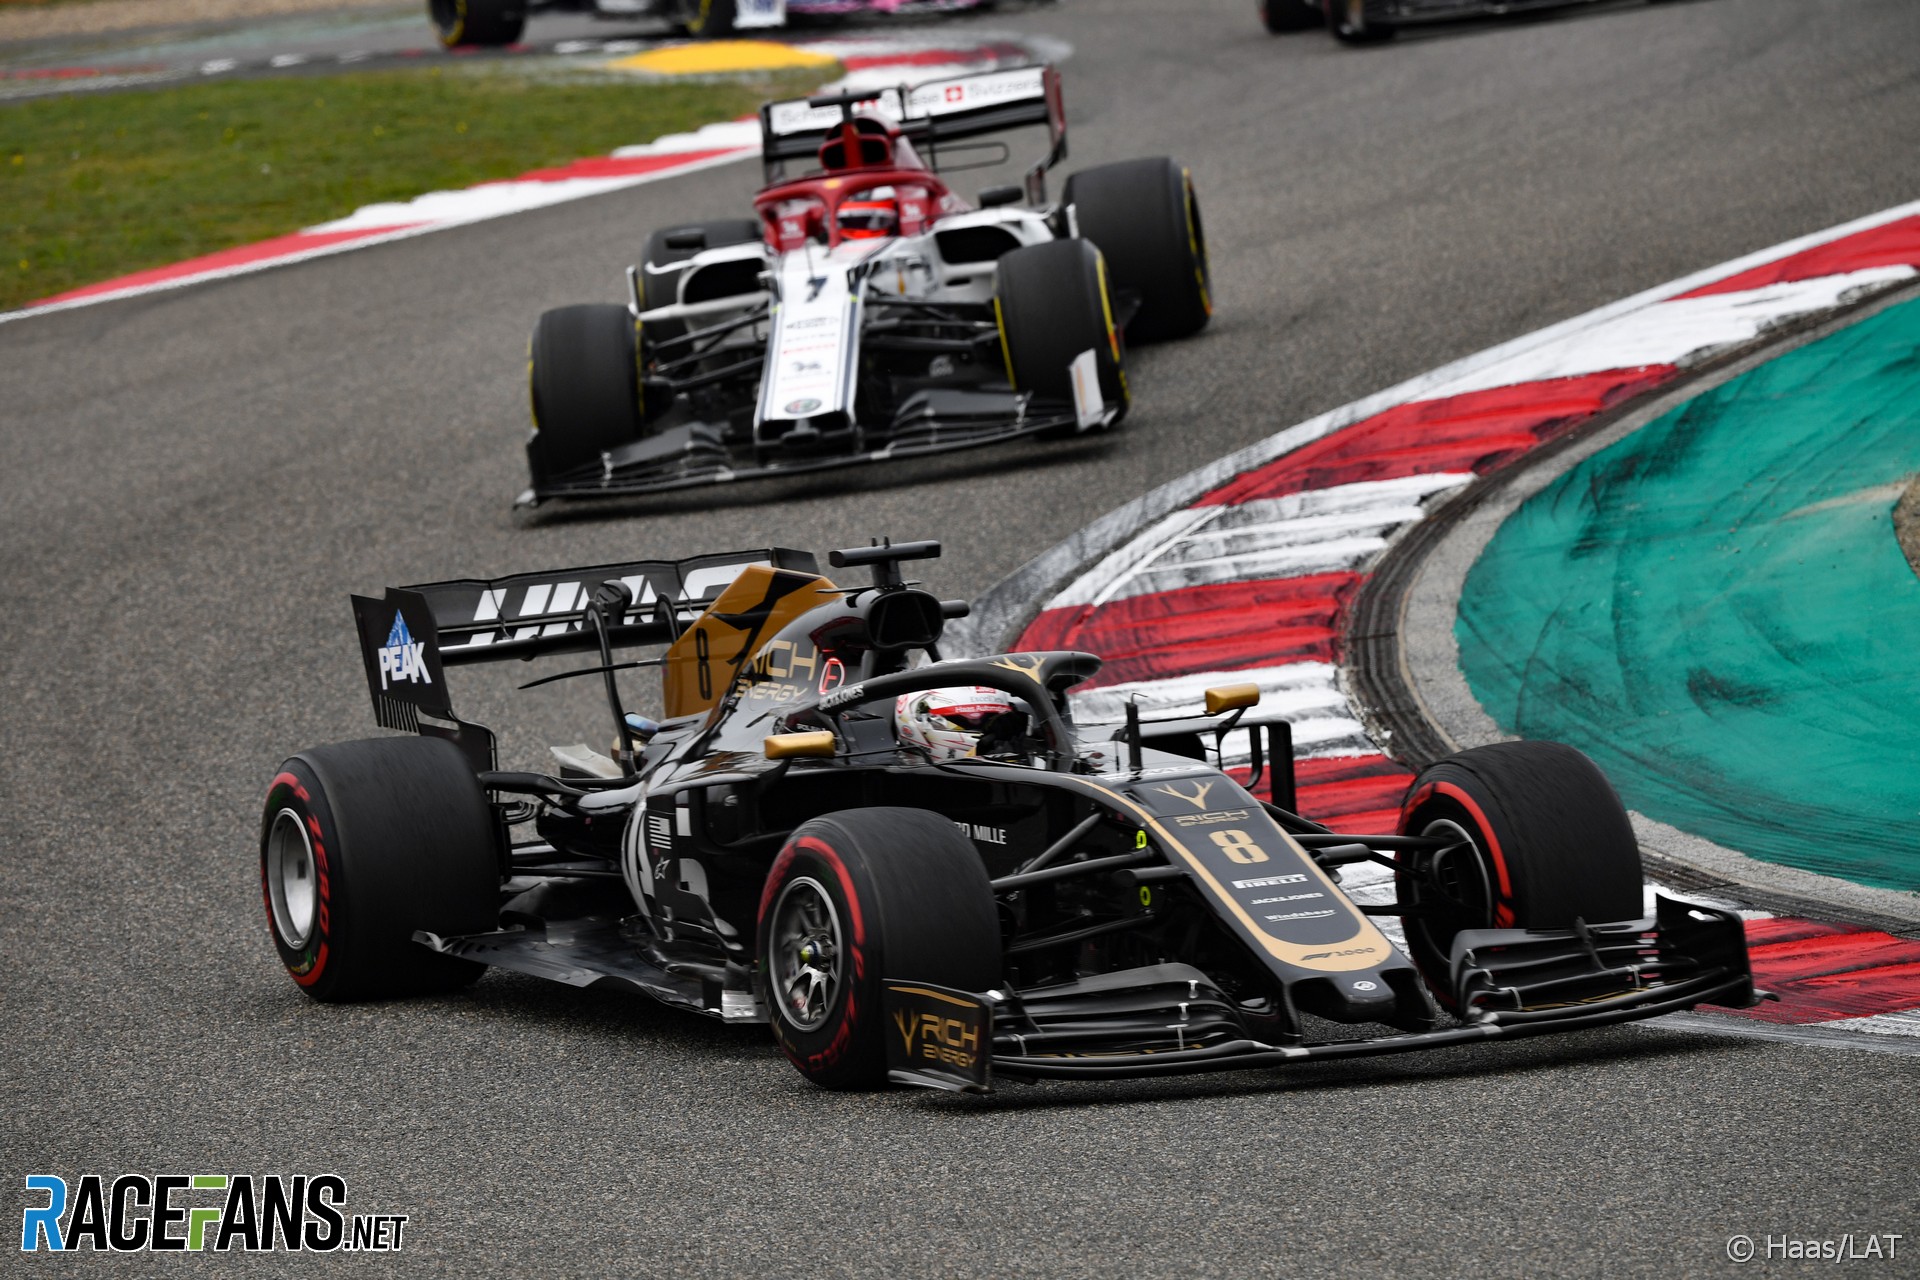 Romain Grosjean, Haas, Shanghai International Circuit, 2019